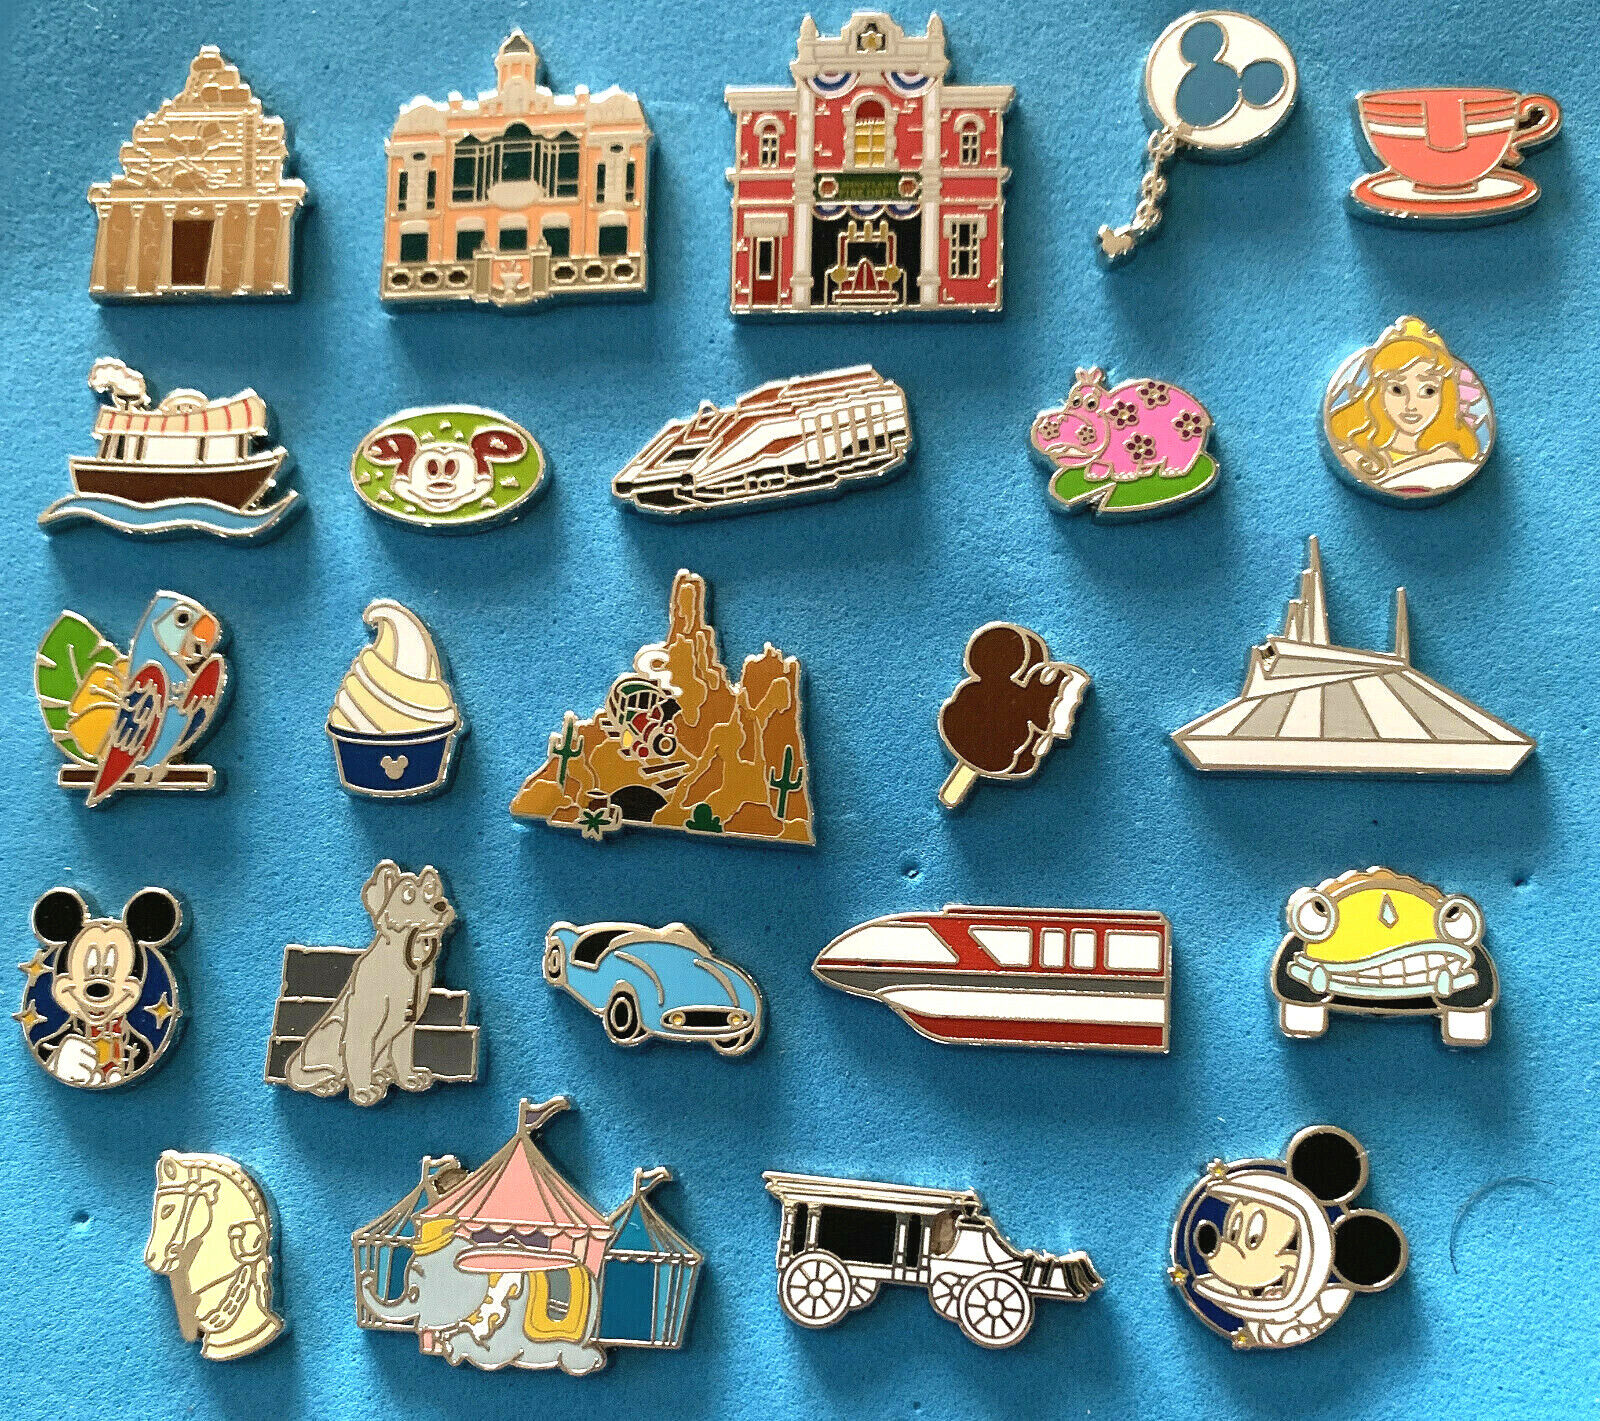 Disneyland Tiny Kingdom Series 3 Mystery Pins - You Pick from 15